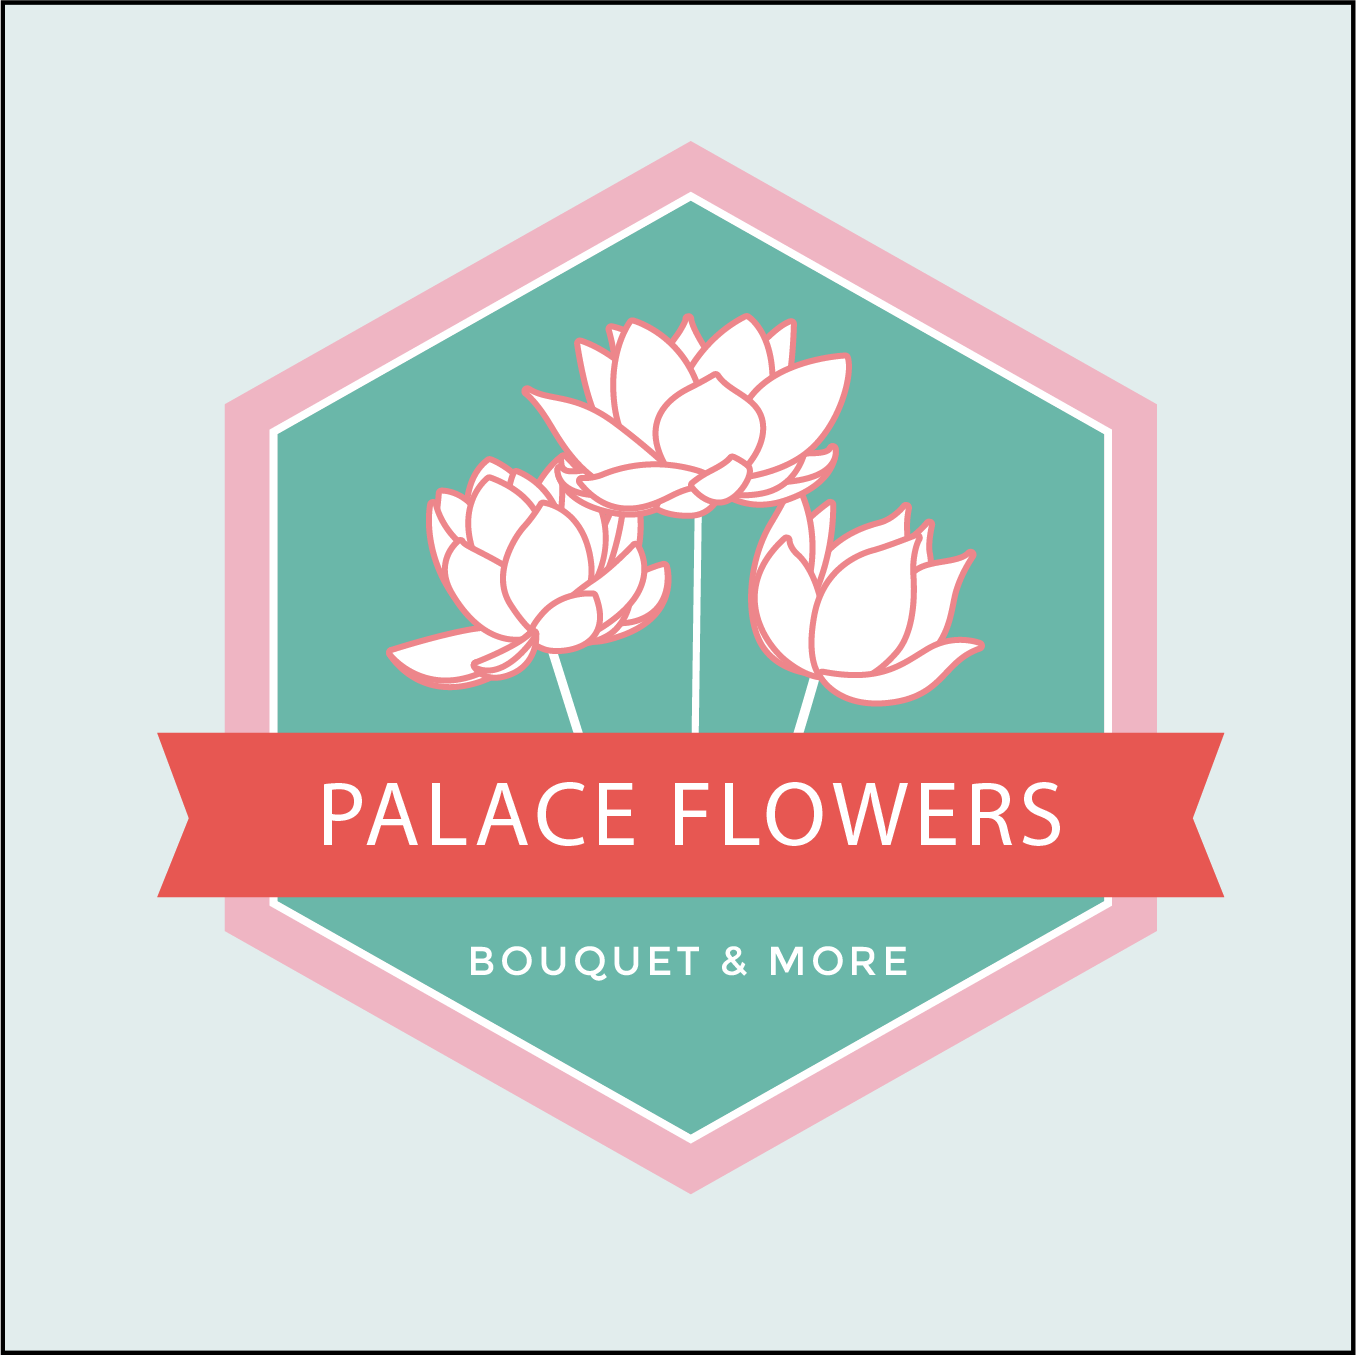 Palace flowers